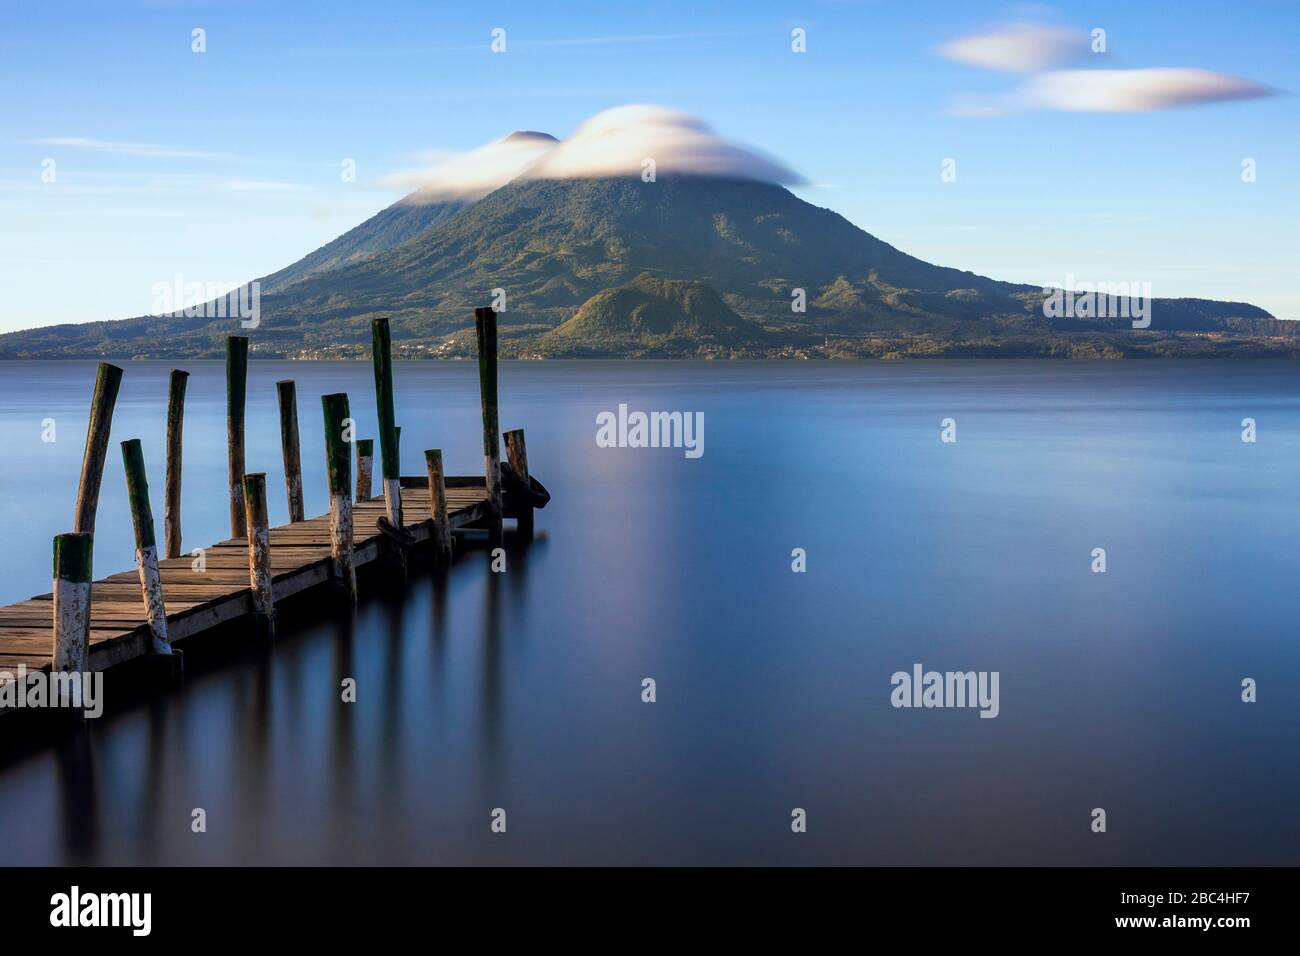 Dock and the Atitlan Volcano, Lake Atitlan, Guatemala. Stock Photo